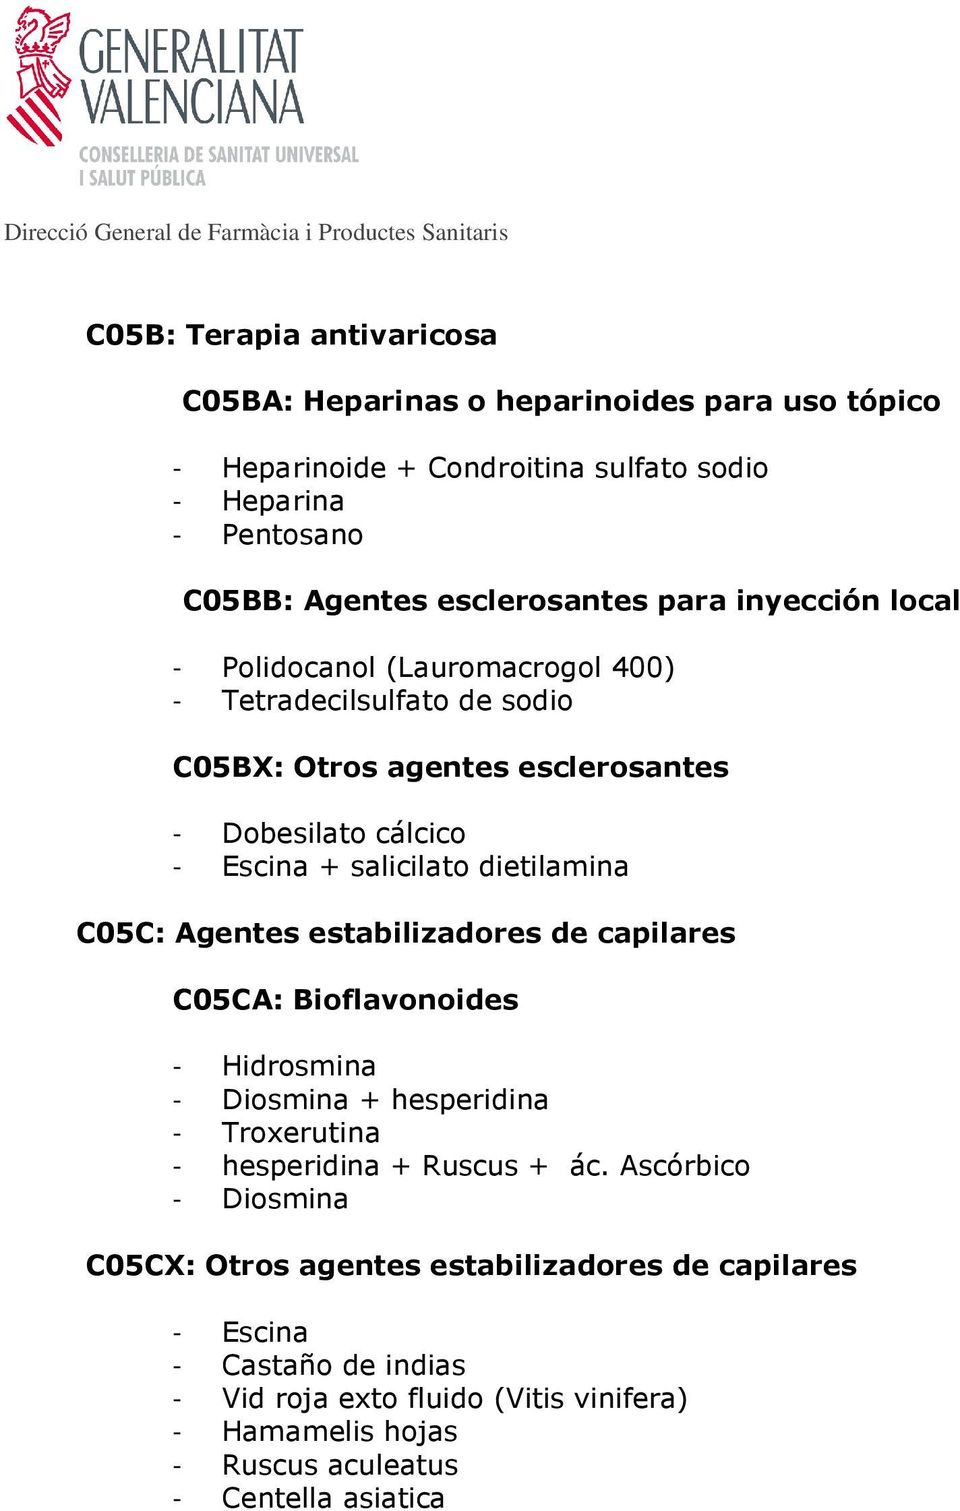 Agentes estabilizadores de capilares C05CA: Bioflavonoides - Diosmina hesperidina - Troxerutina - hesperidina Ruscus ác.